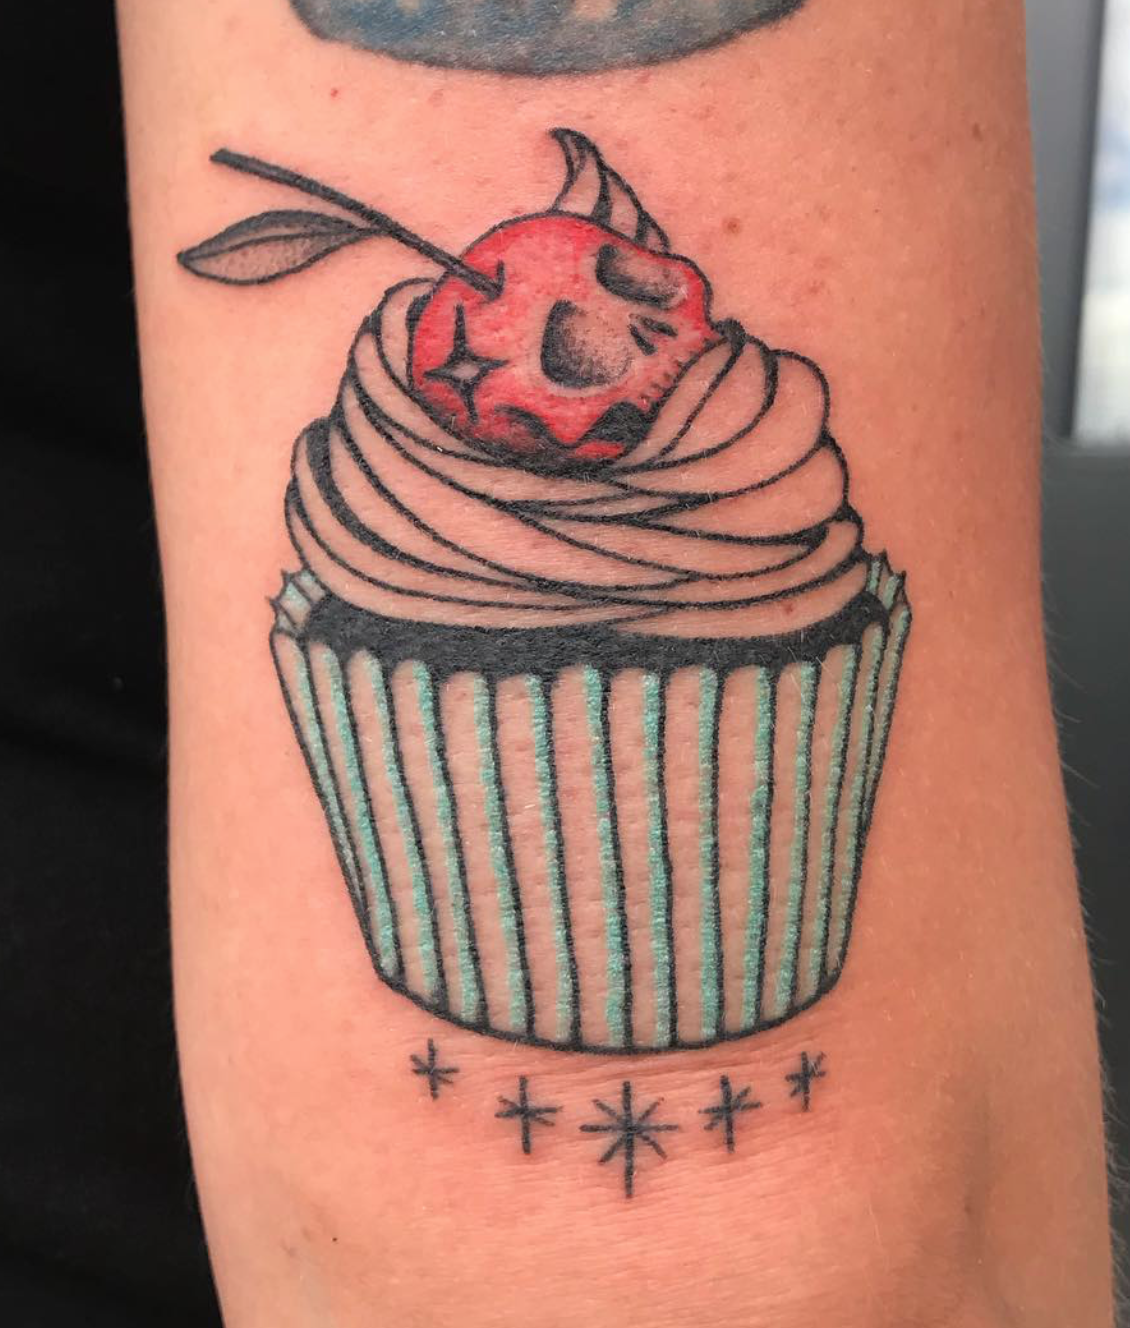 Skull cupcake tattoo by Rachel Patton